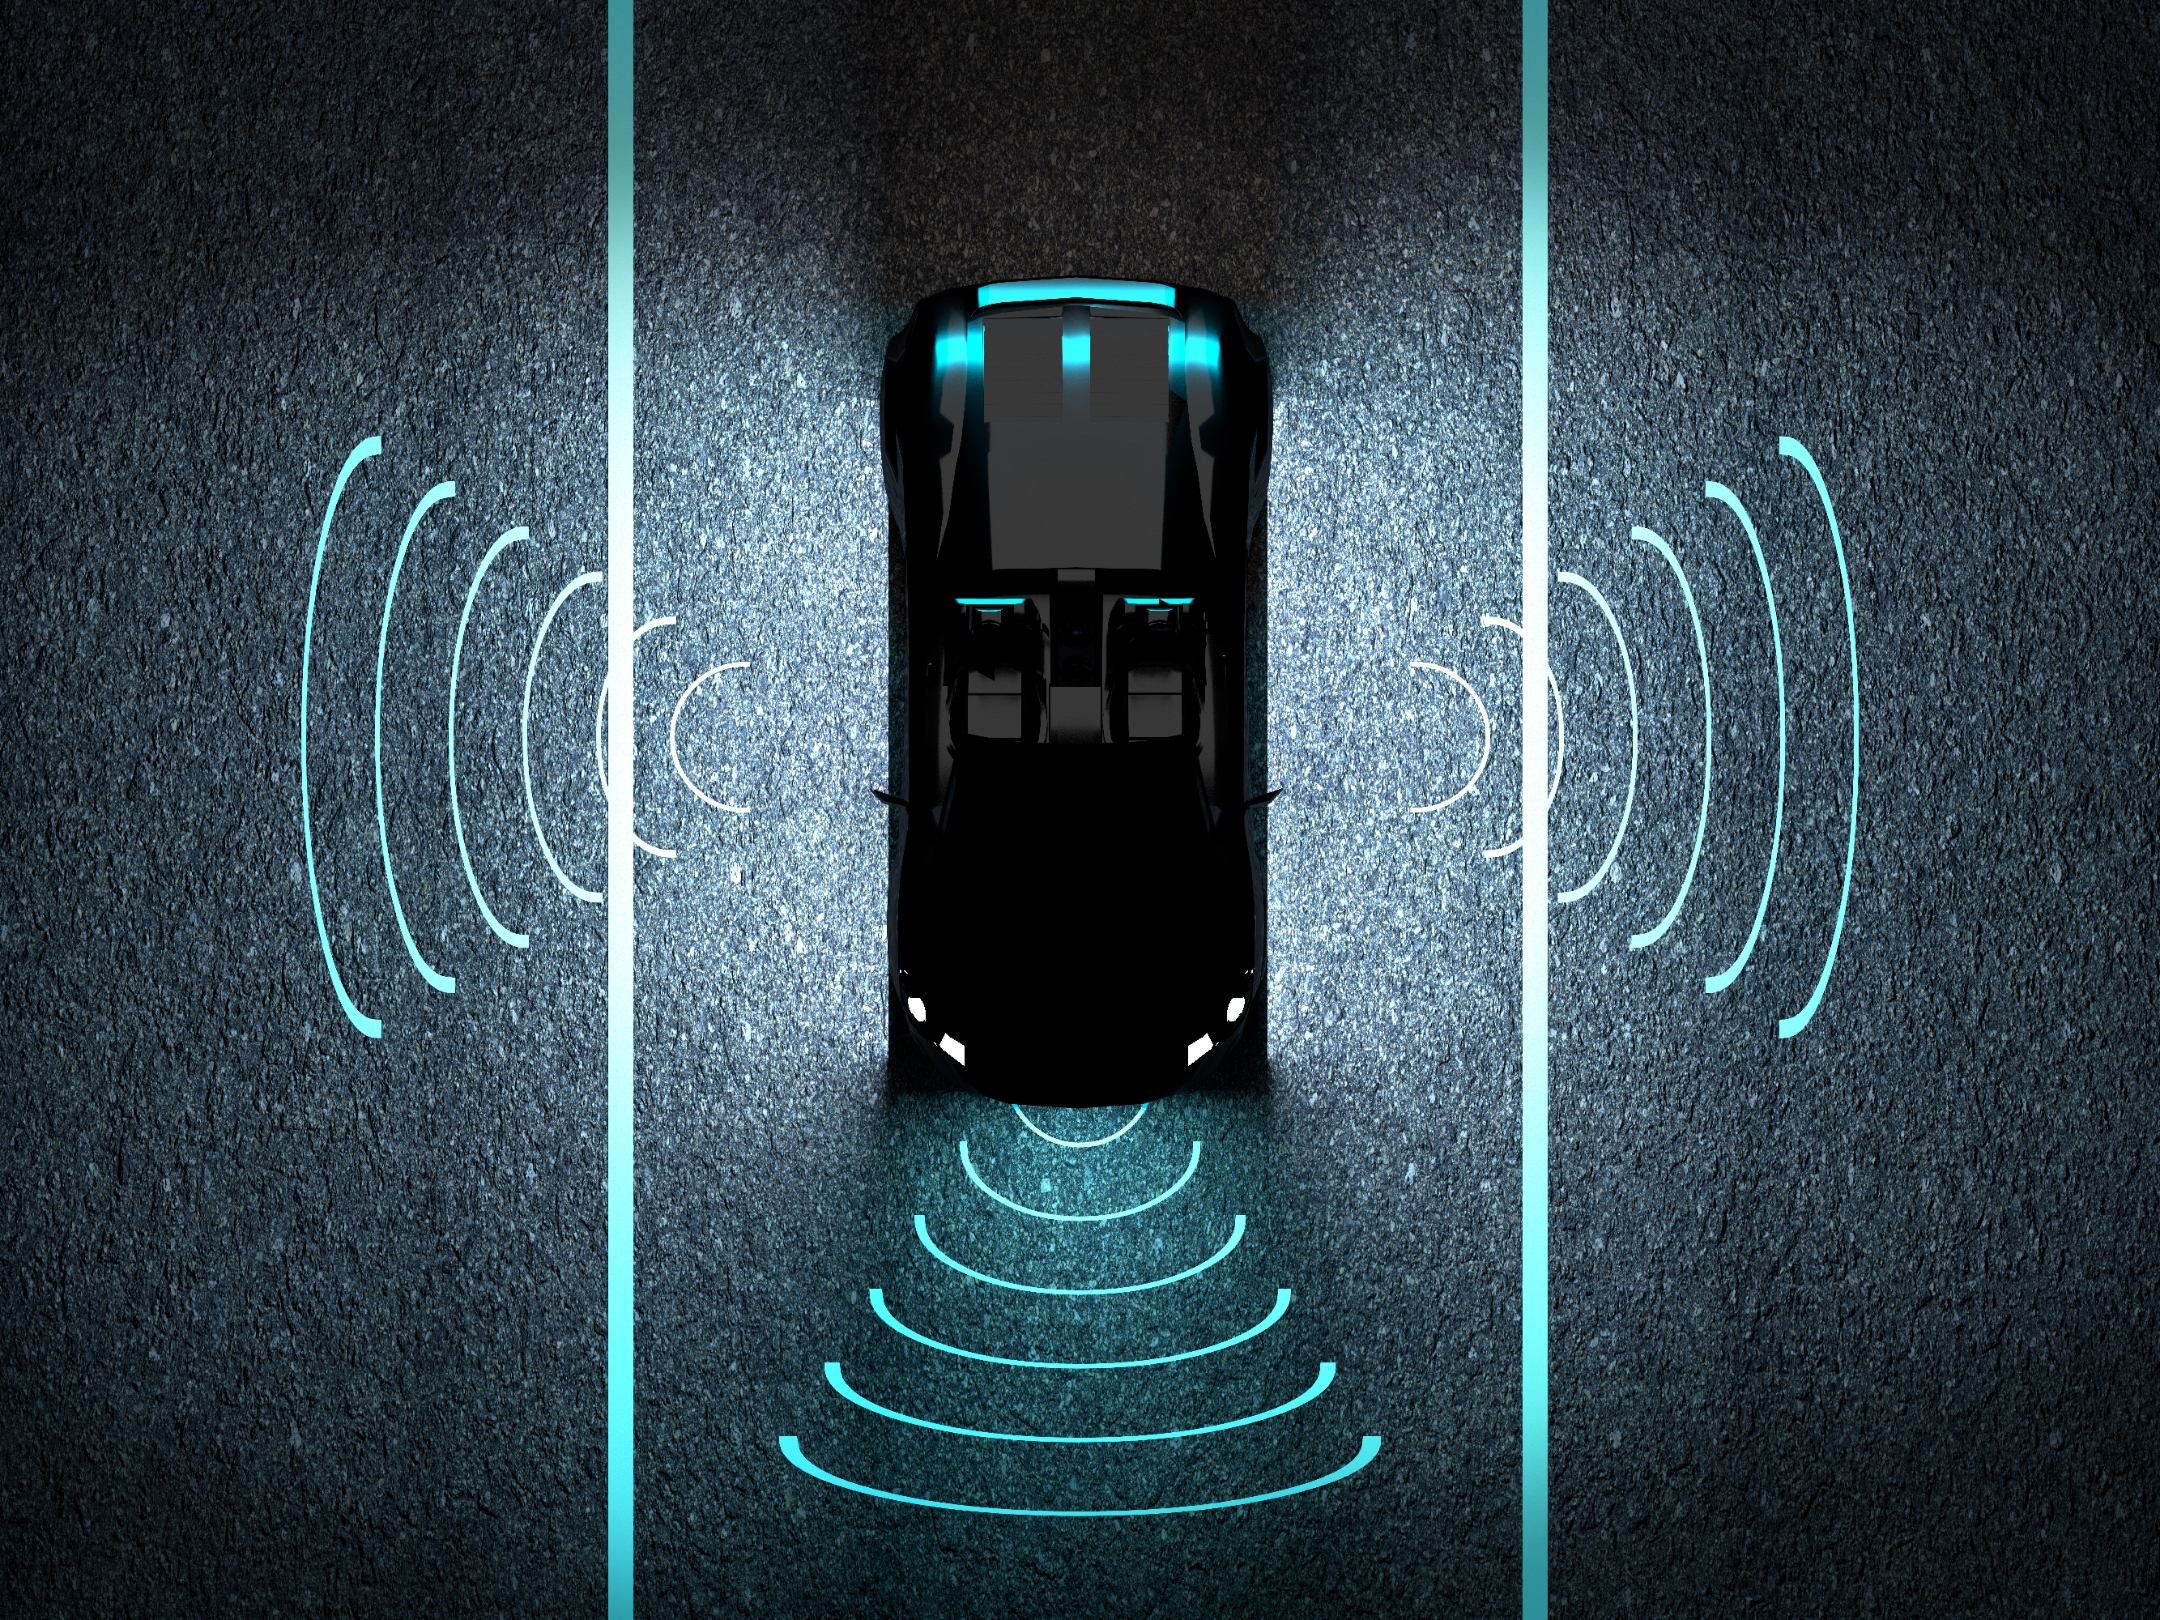 Autonomous car sensors help keep drivers safe